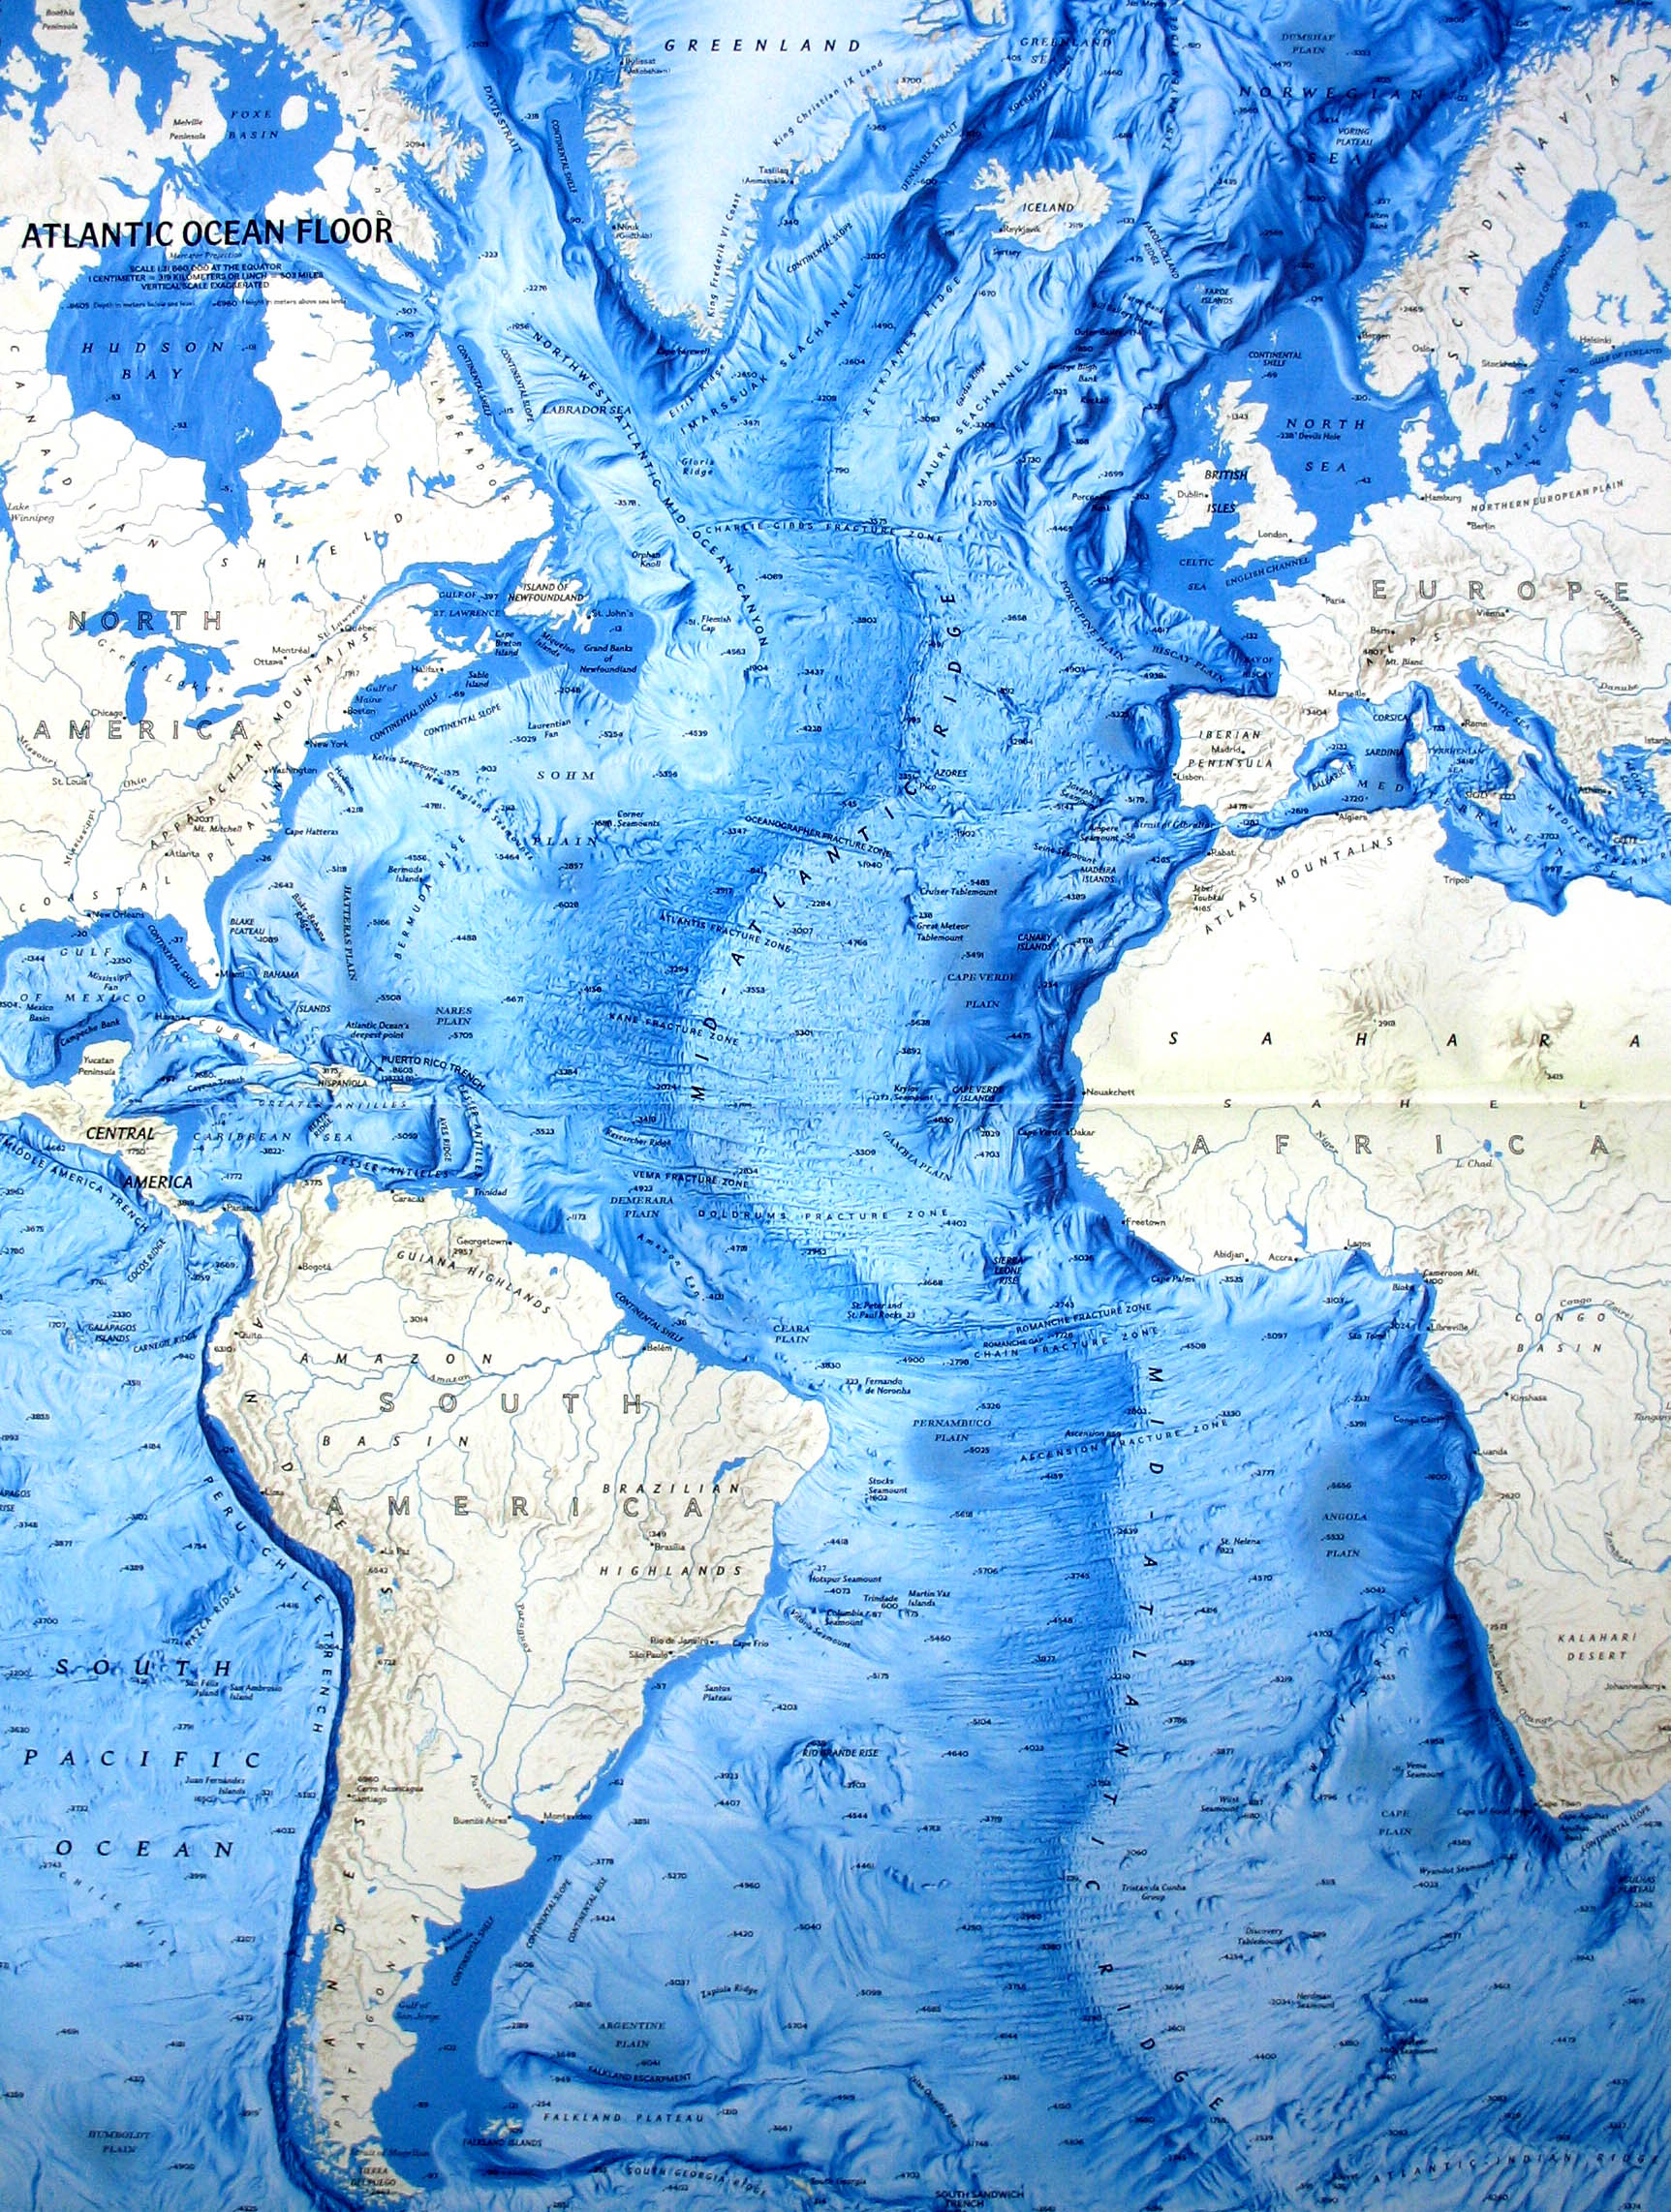 Атлас тихого океана. Рельеф дна Атлантического океана. Карта дна Атлантического океана. Рельеф дна океана Атлантического океана. Карта рельефа дна Атлантического океана.